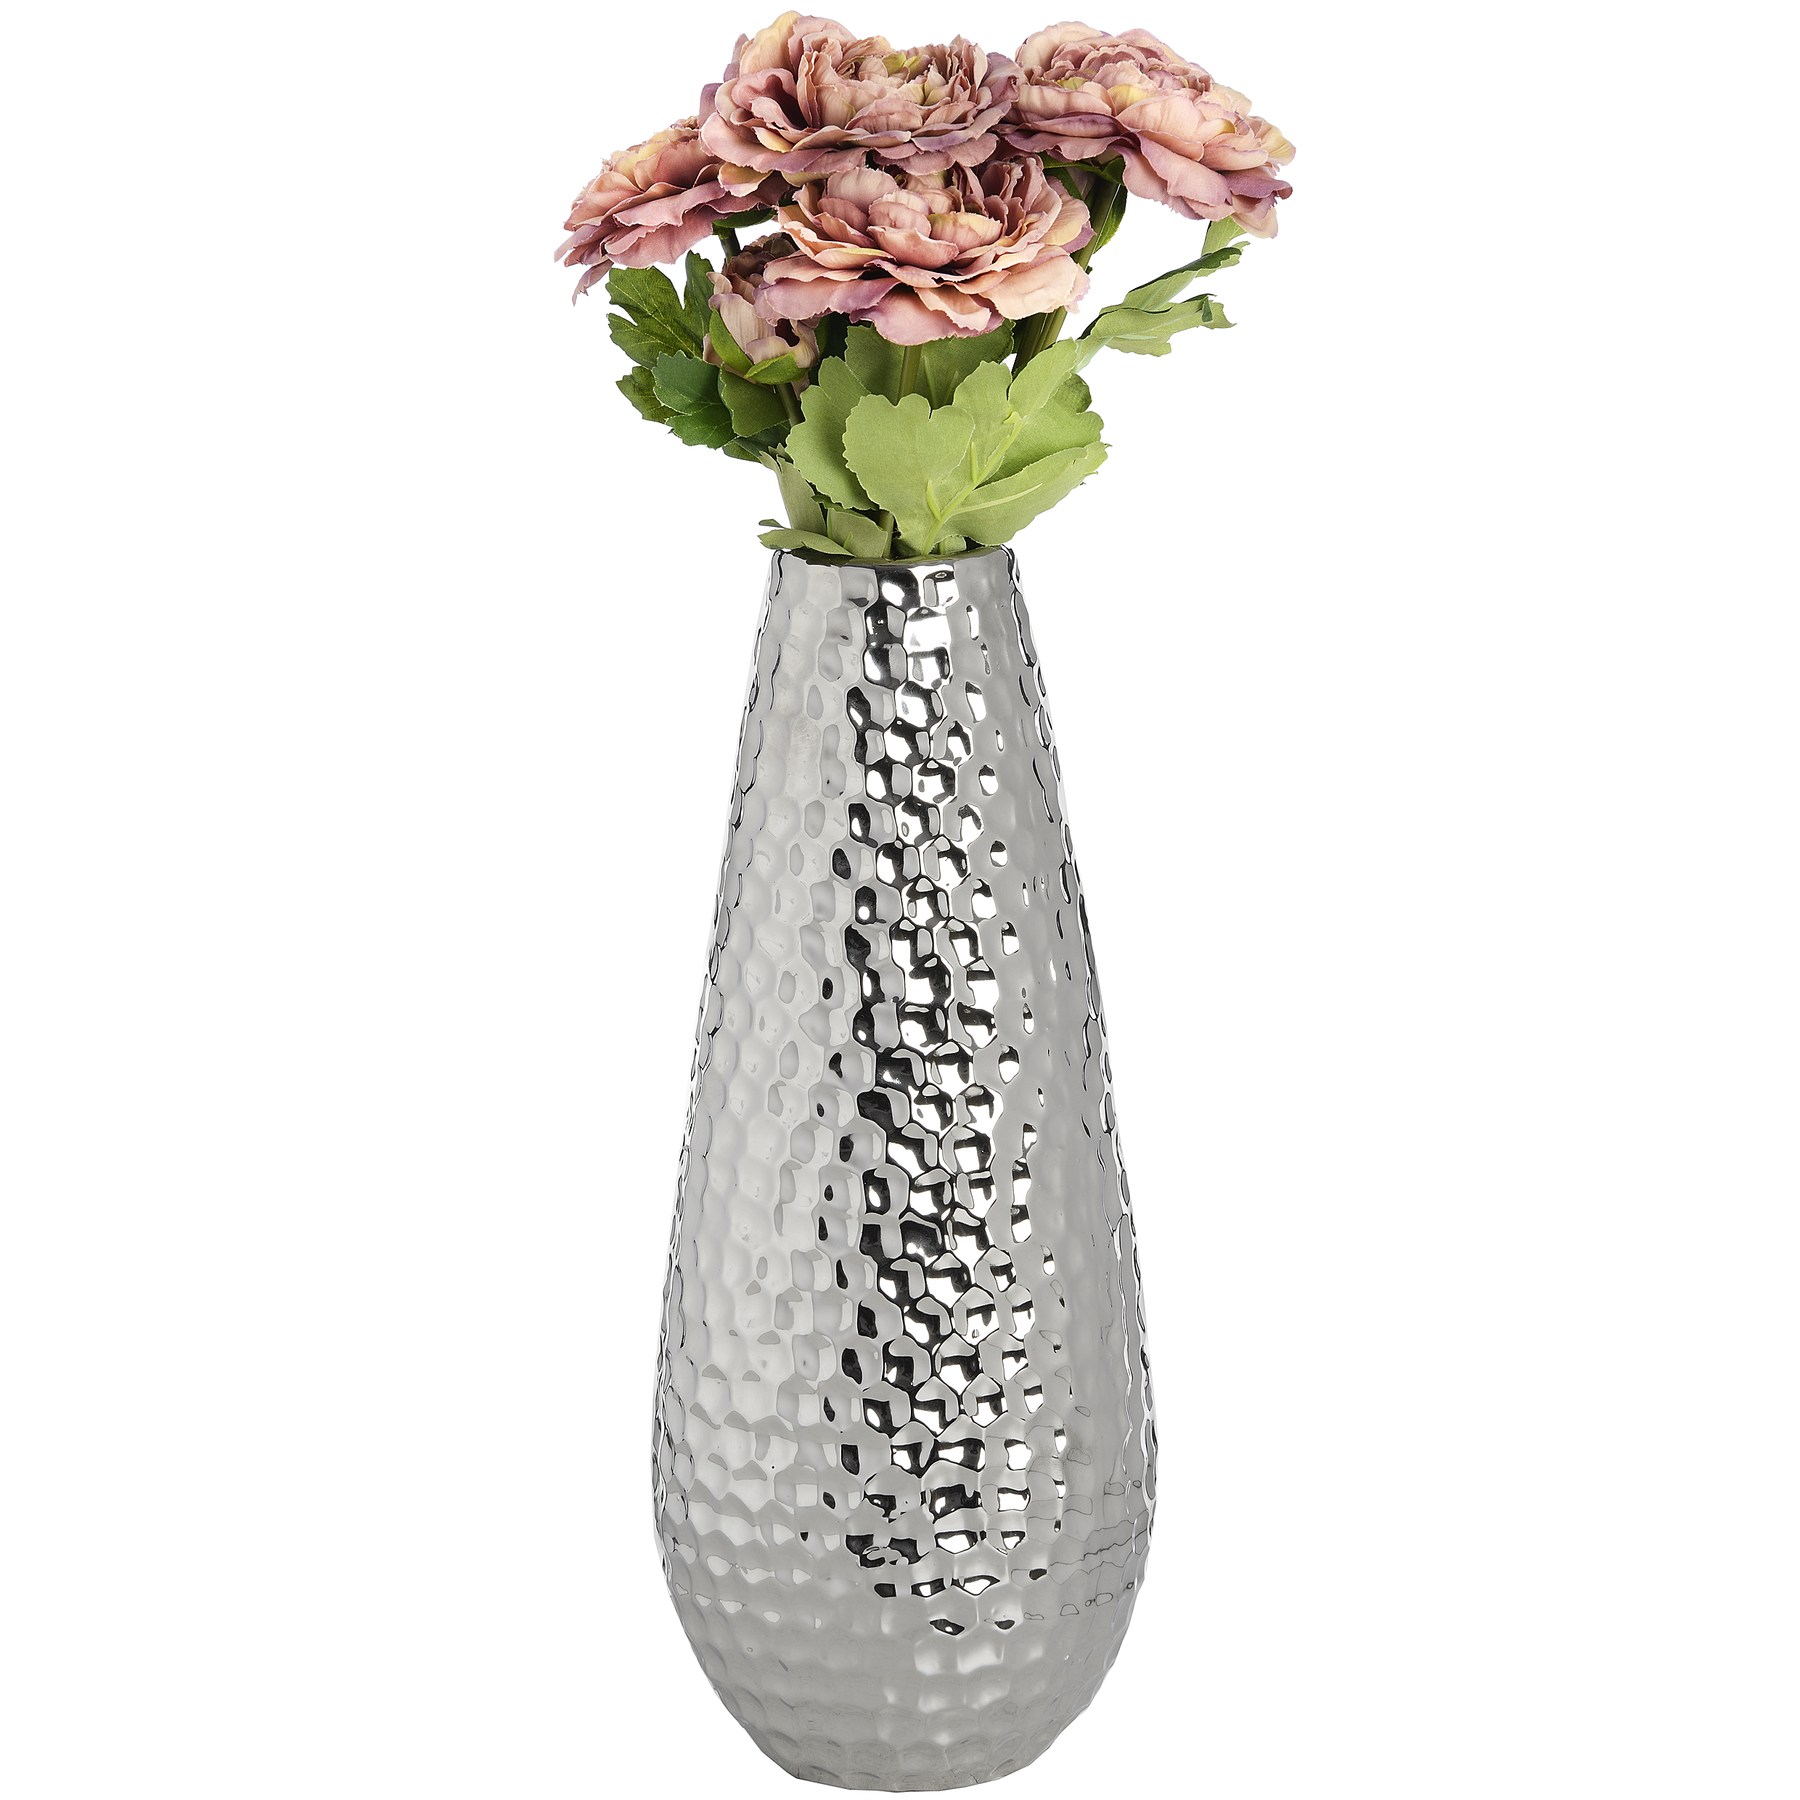 Large Silver Ceramic Bulb Vase in Dimple Effect - Image 2